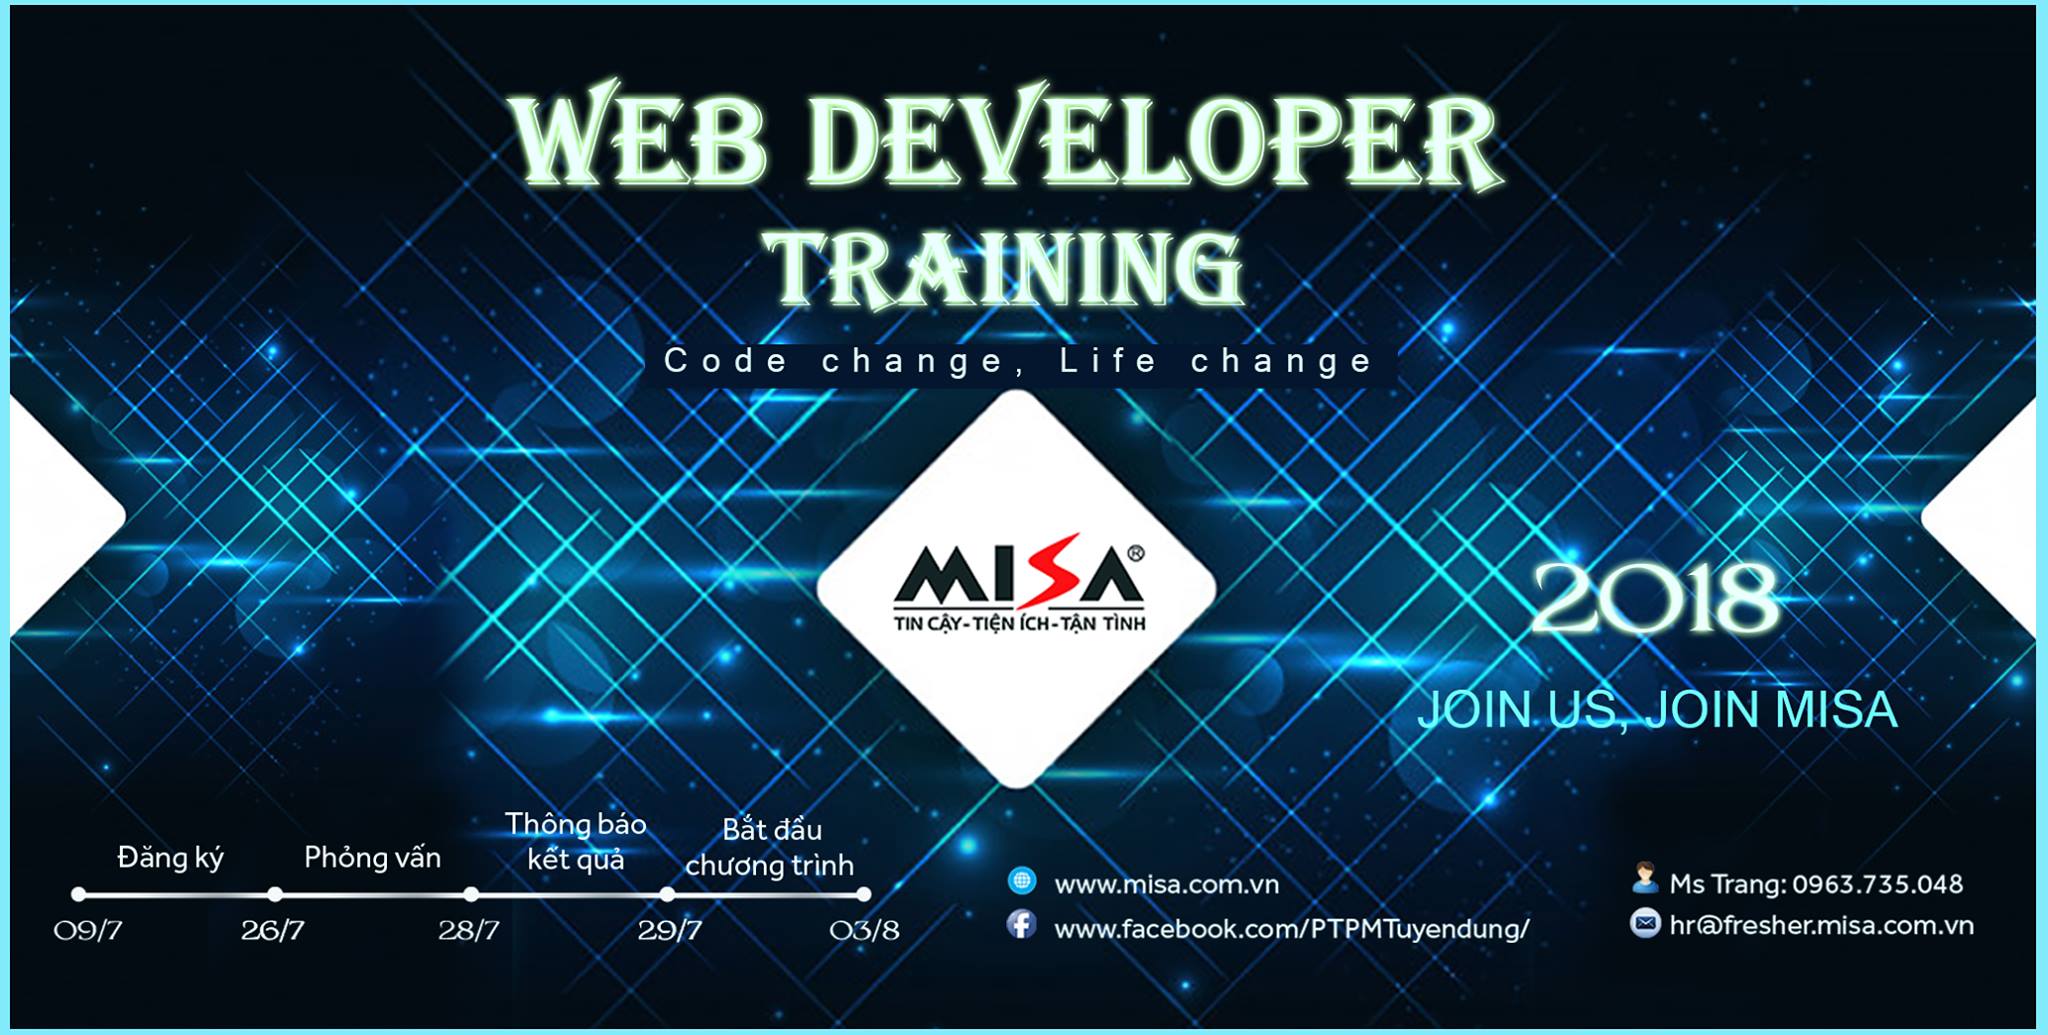 web developer training 2018